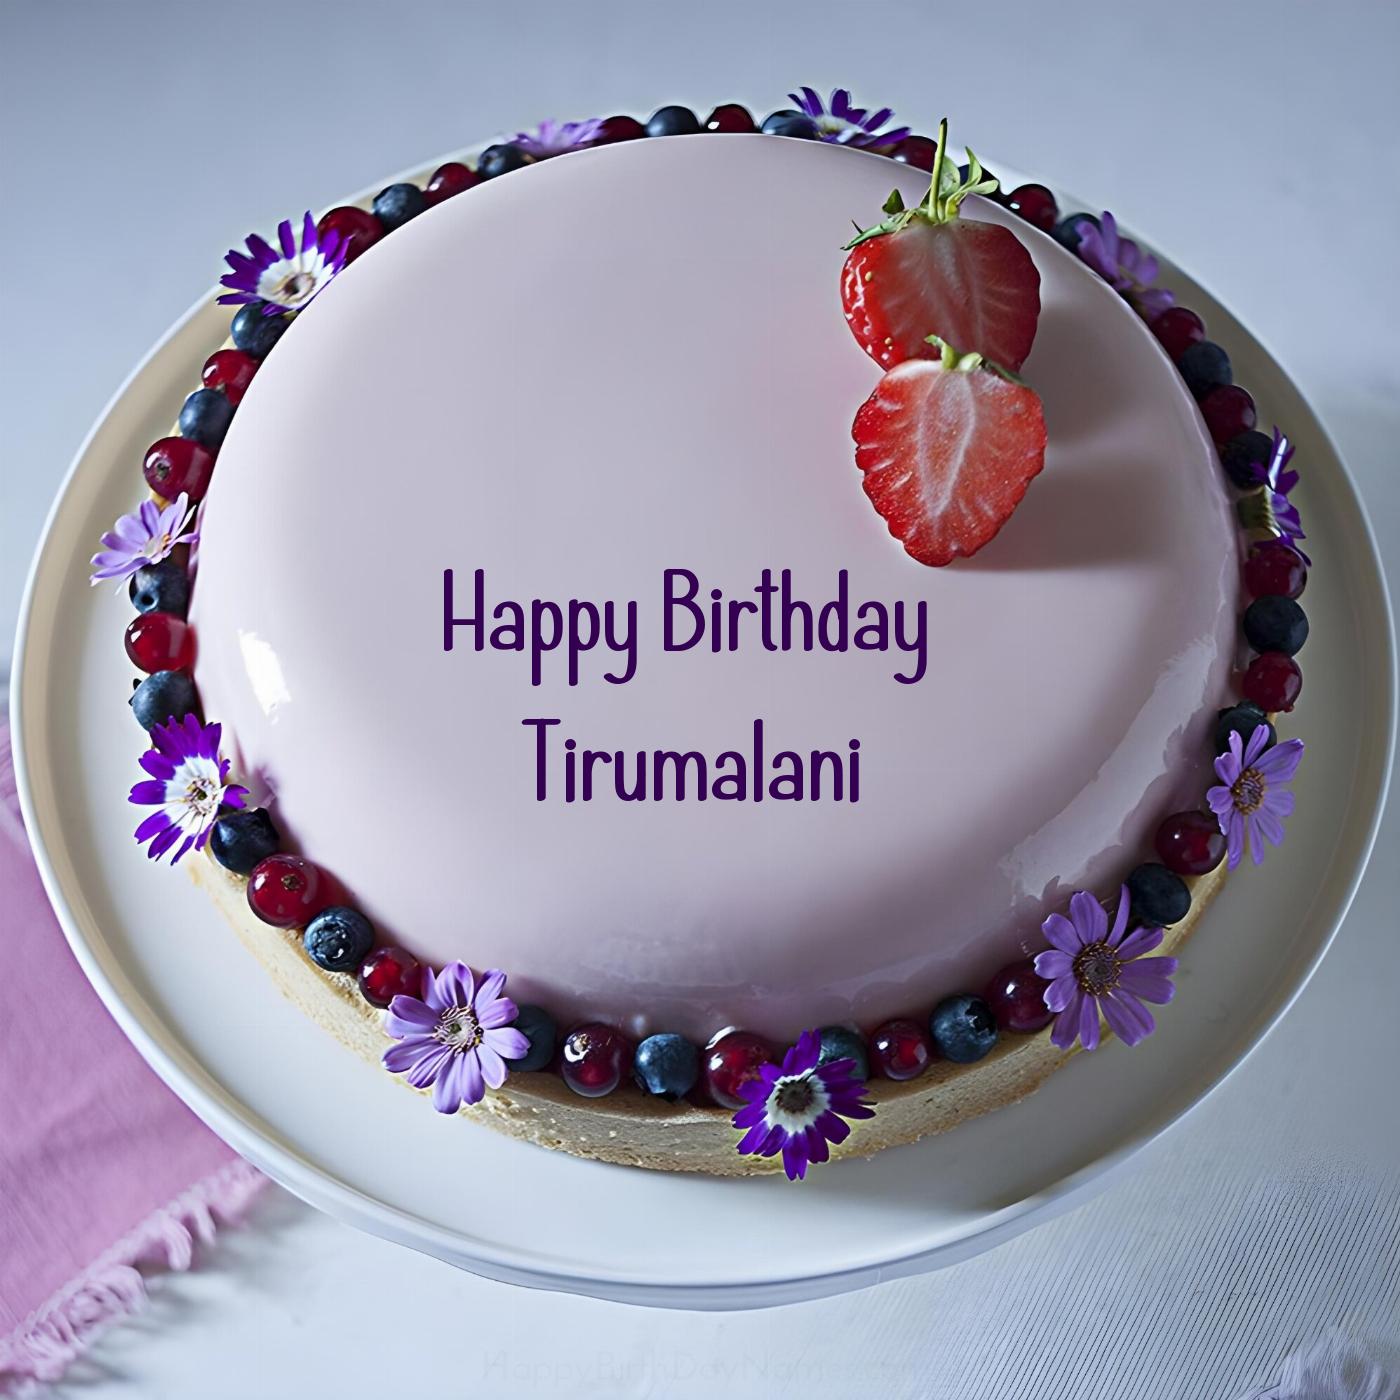 Happy Birthday Tirumalani Strawberry Flowers Cake